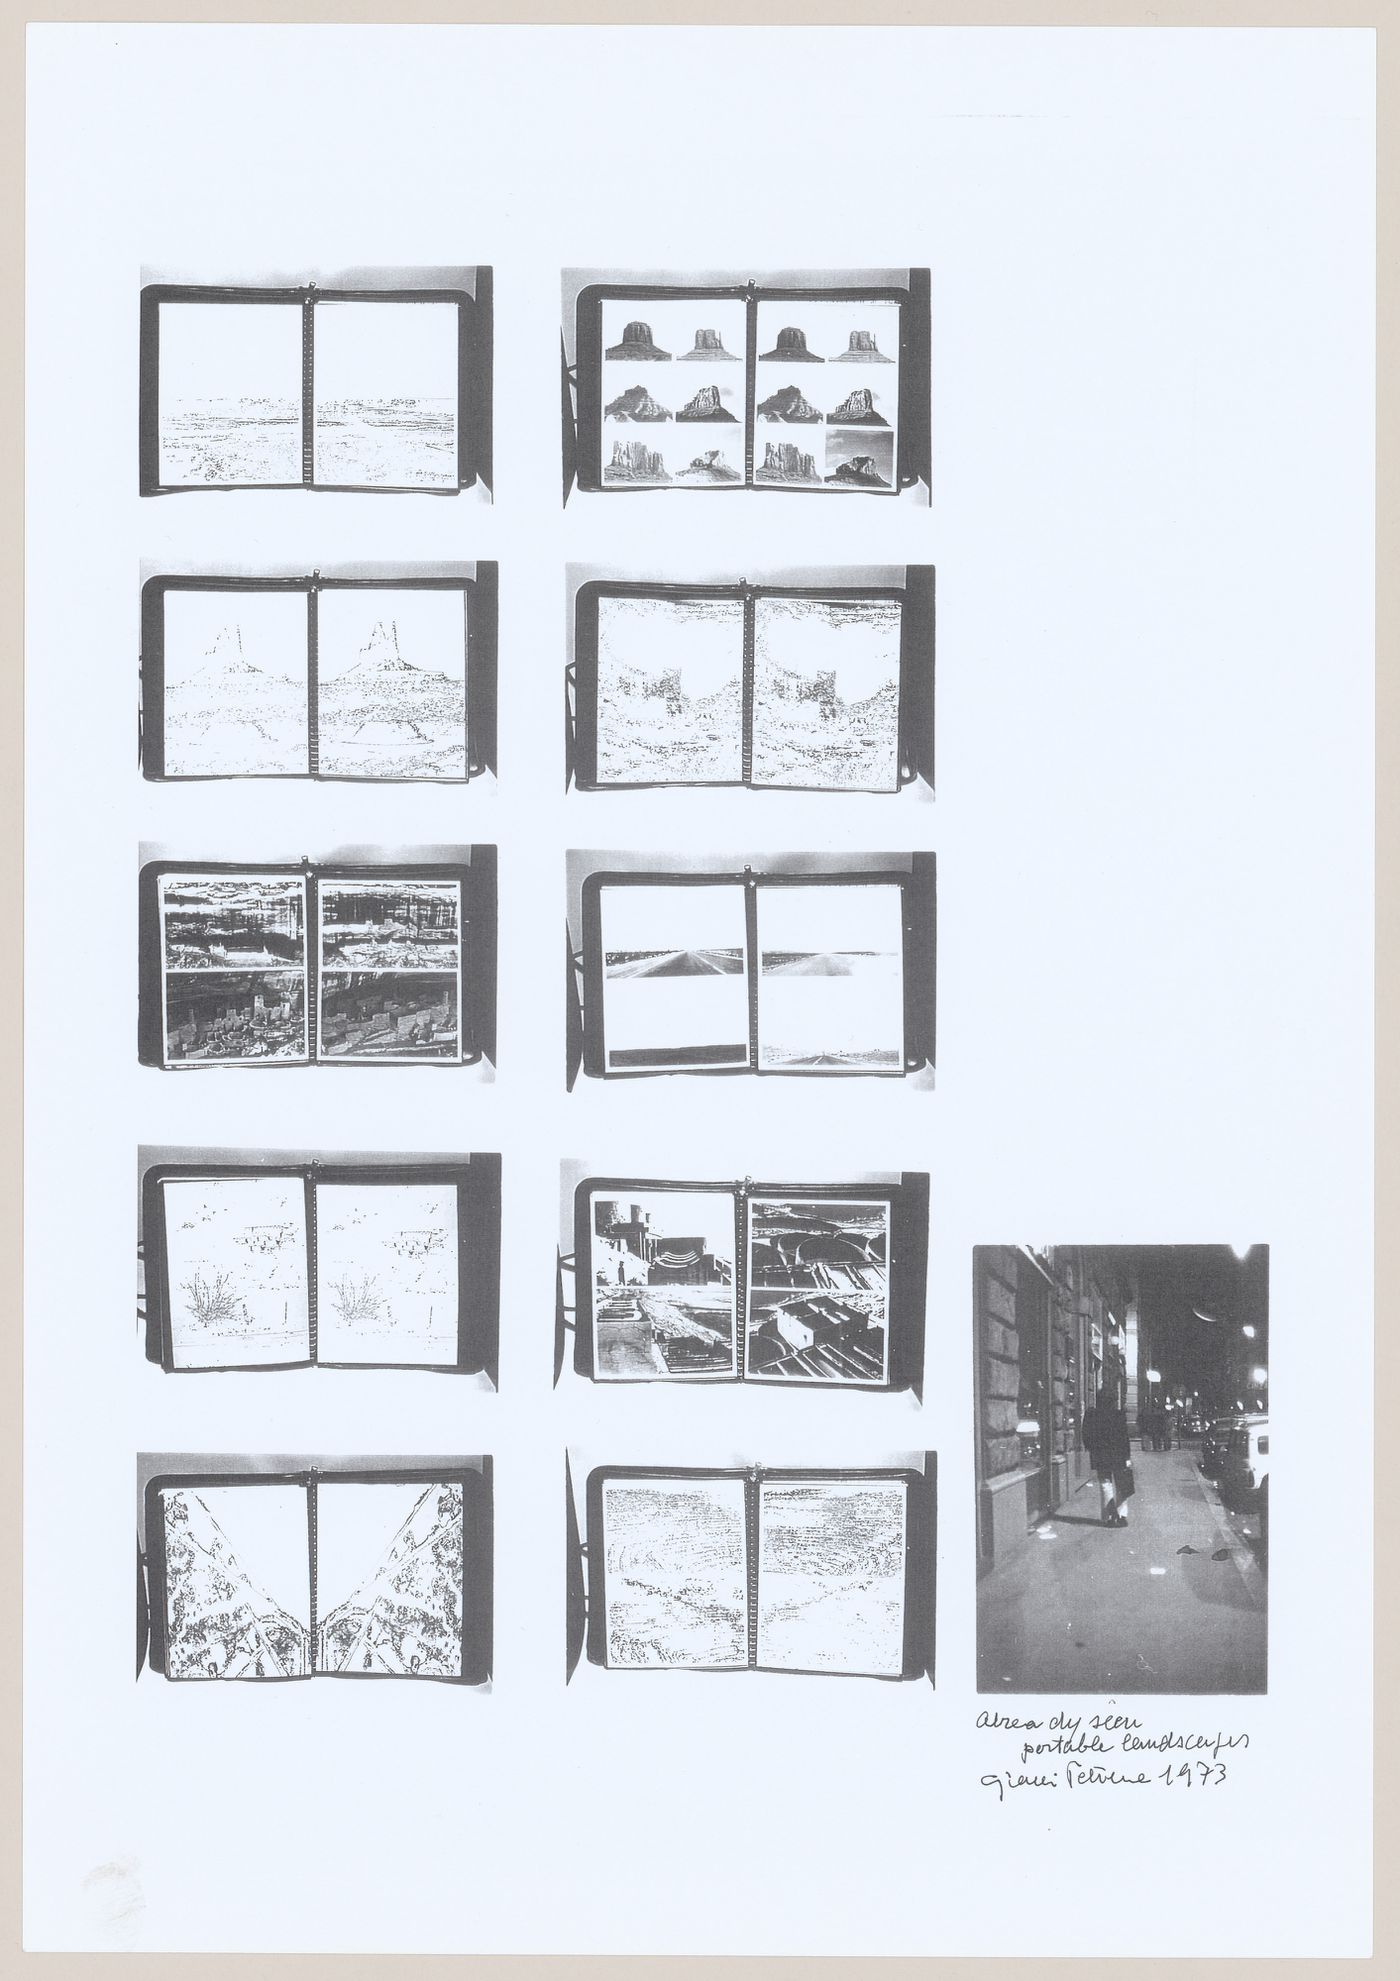 Montage of photographs of the "non conscious" architecture's photo album, Already Seen Portable Landscape